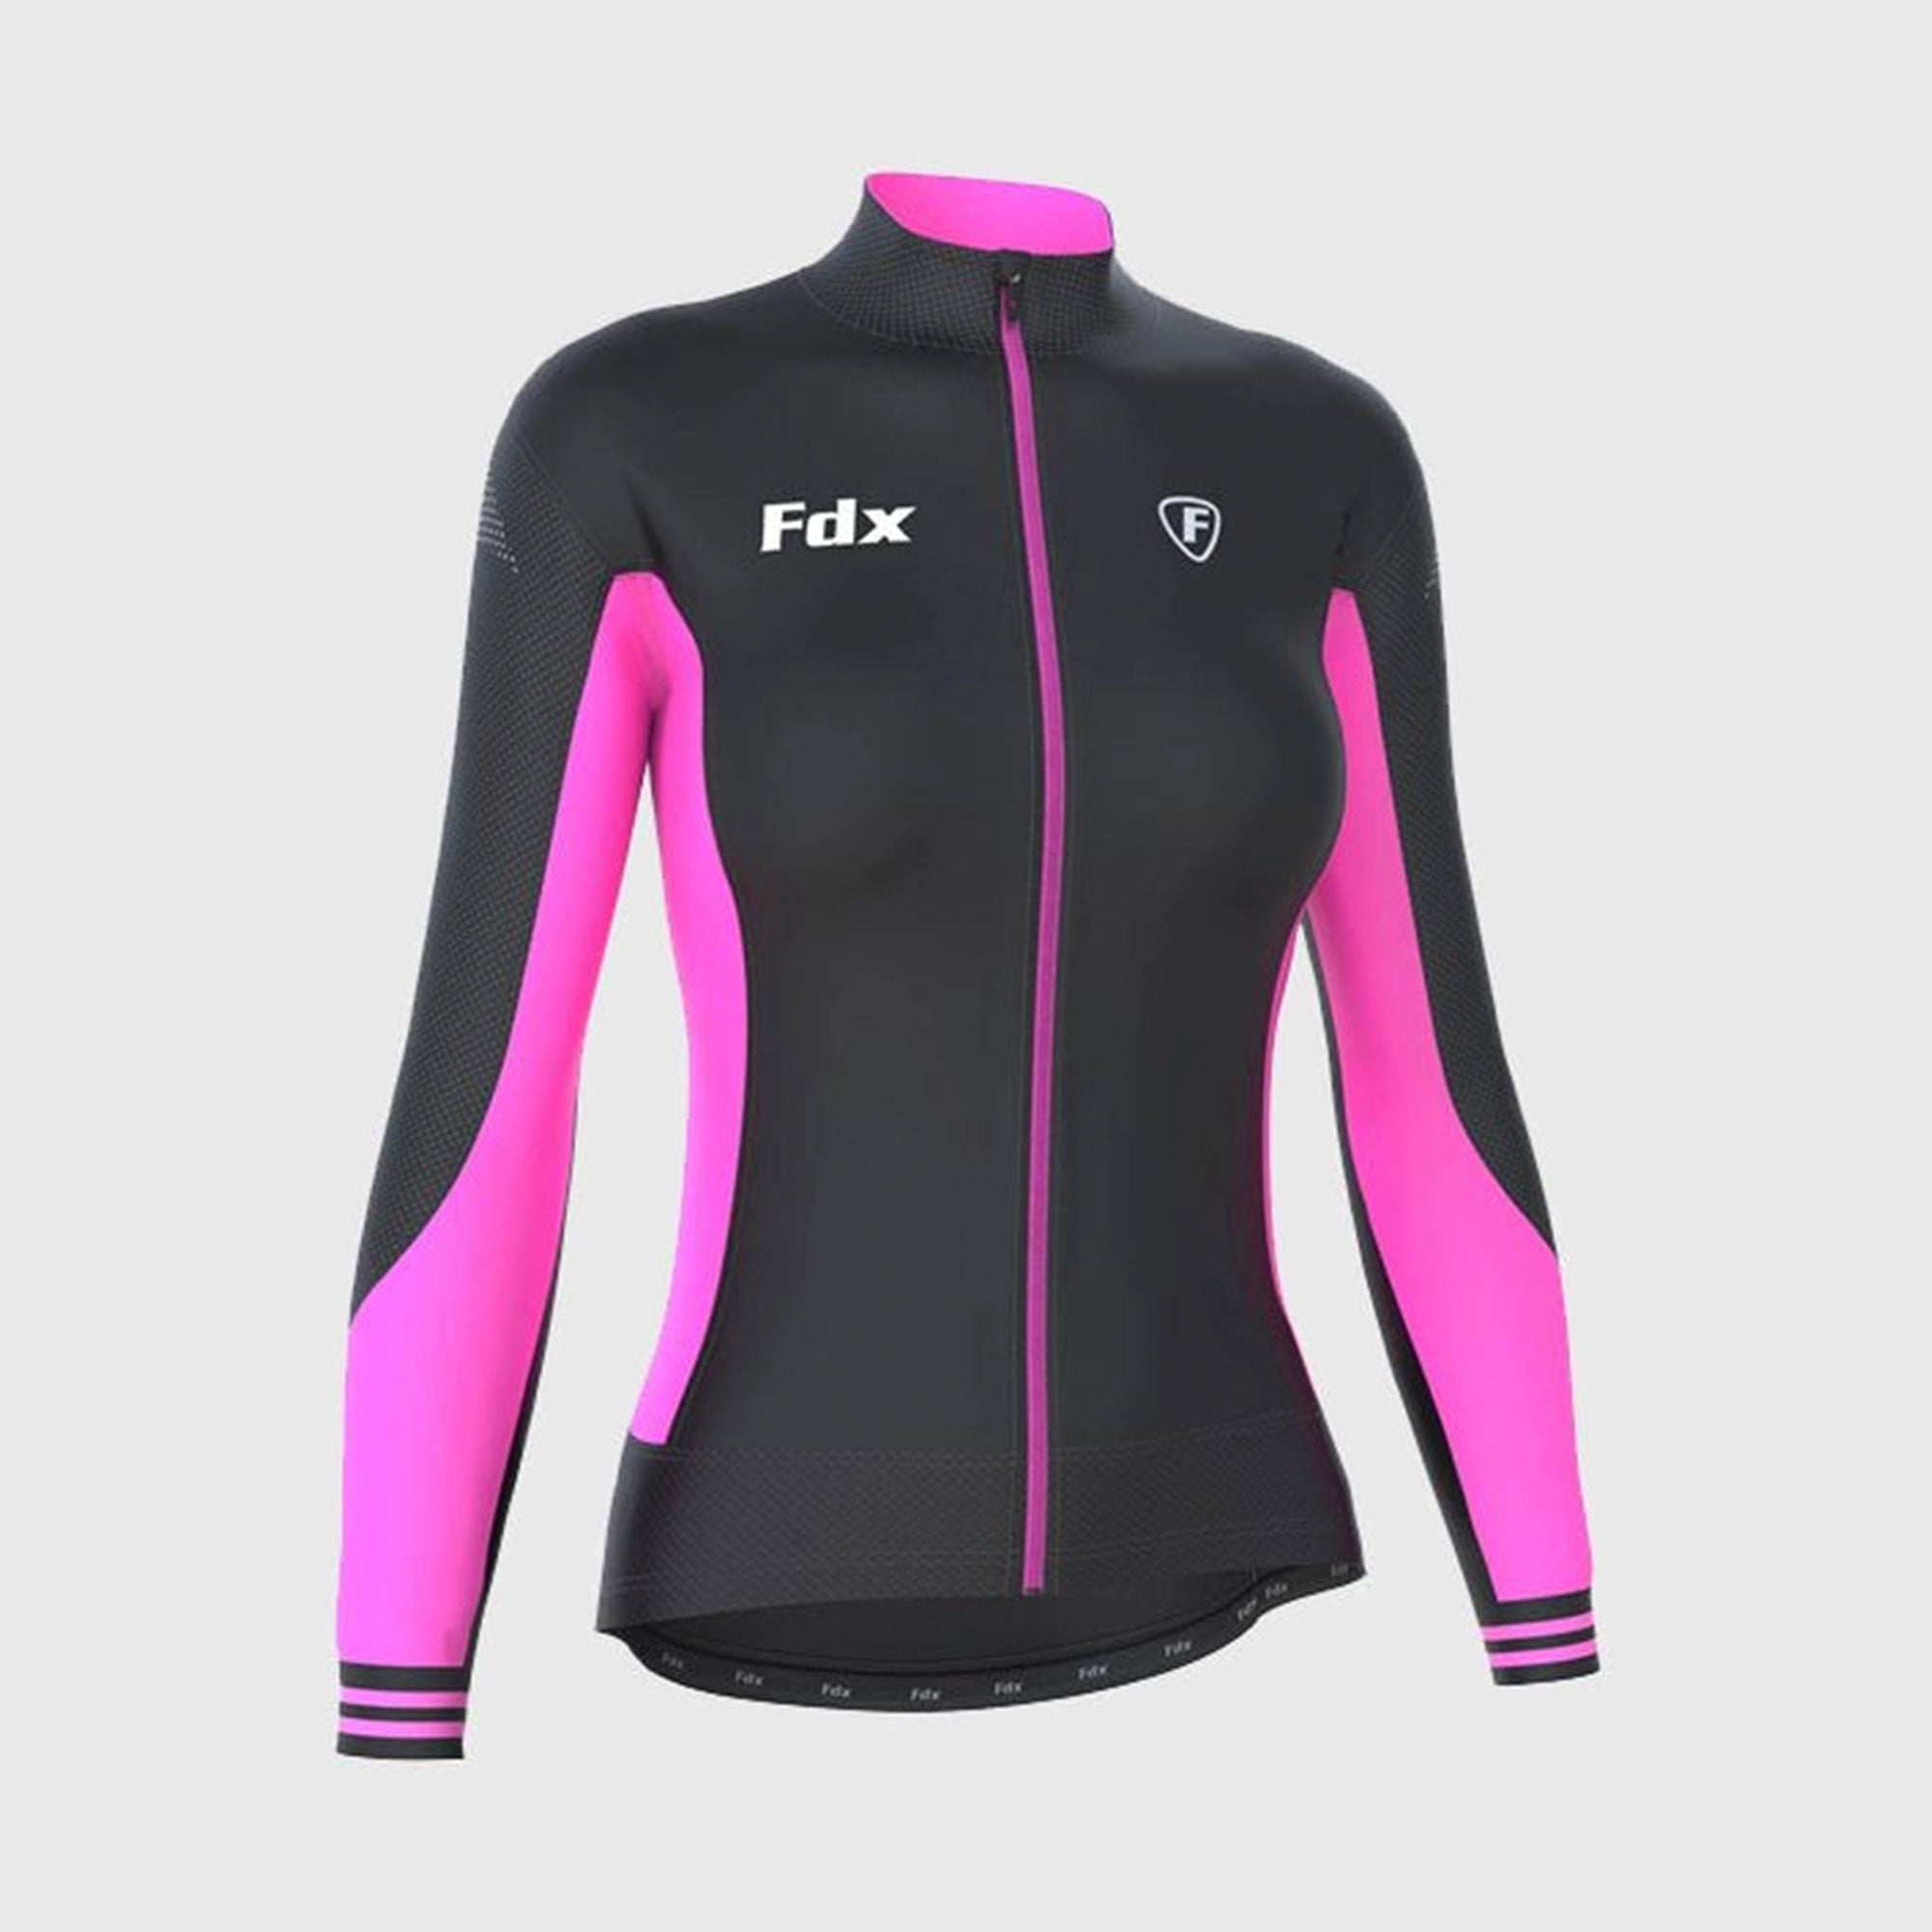 Fdx Thermodream Pink Women's Long Sleeve Winter Cycling Jersey